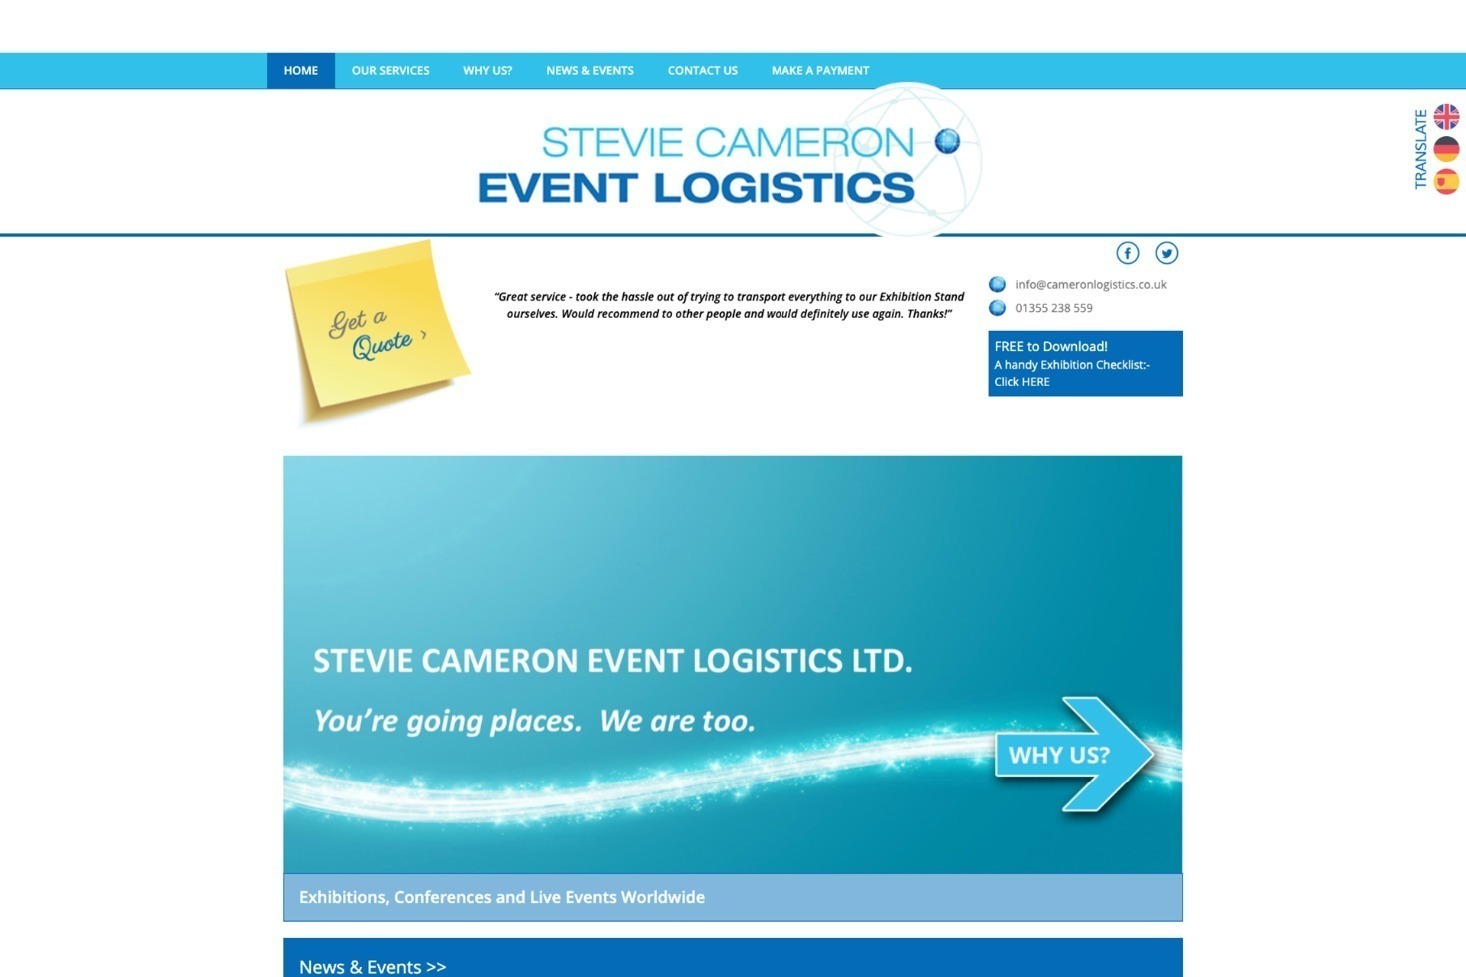 Steve Cameron Event Logistics website by it'seeze Dublin